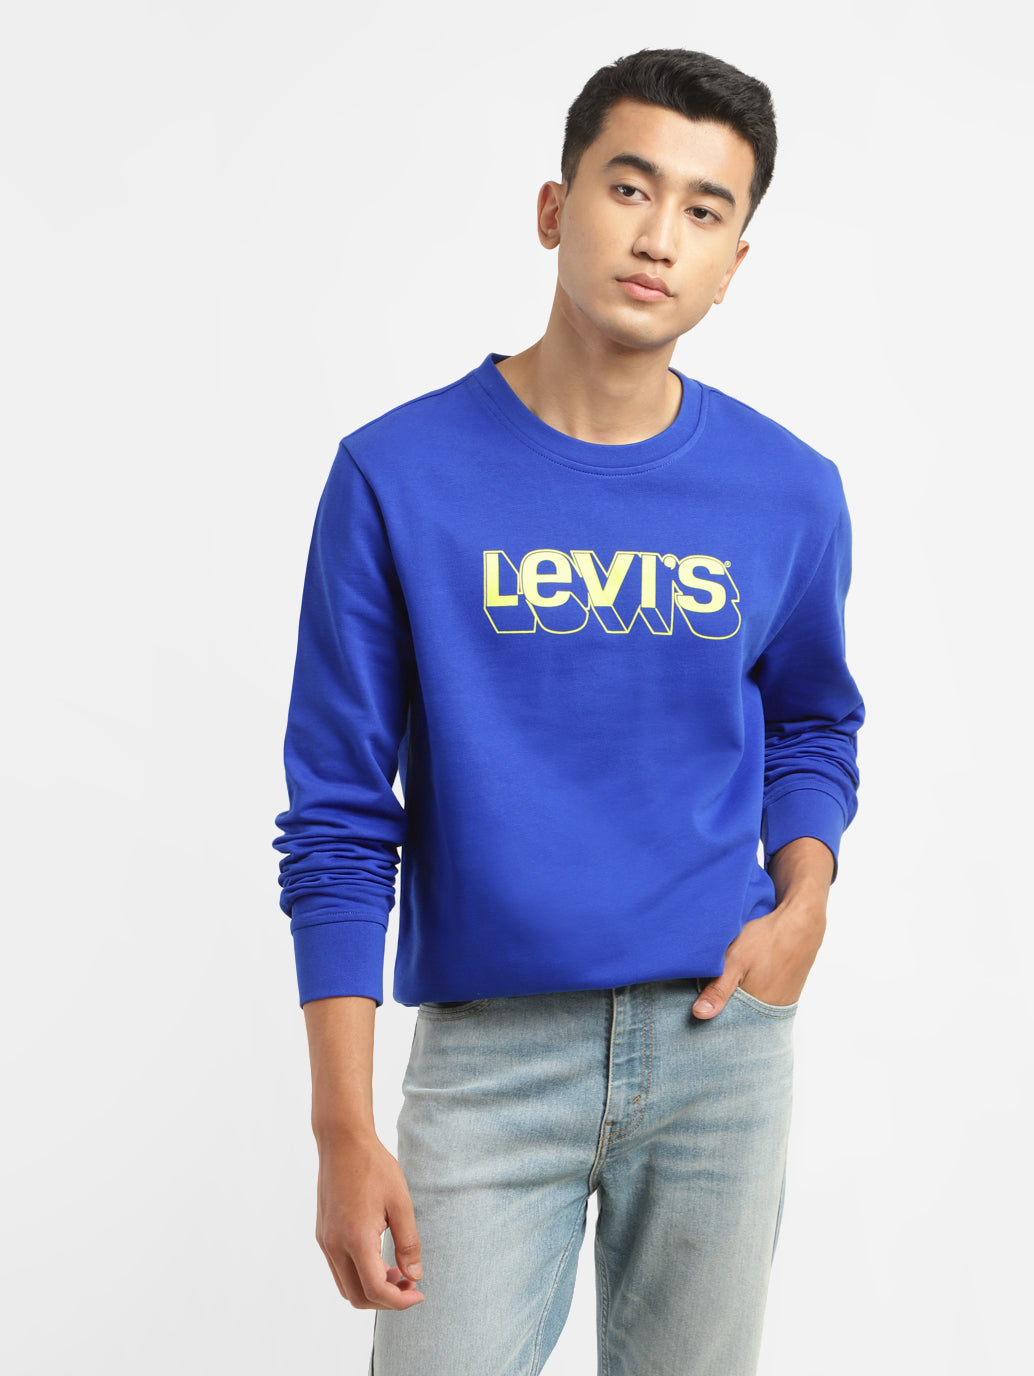 Men's Brand Logo Blue Crew Neck Sweatshirt